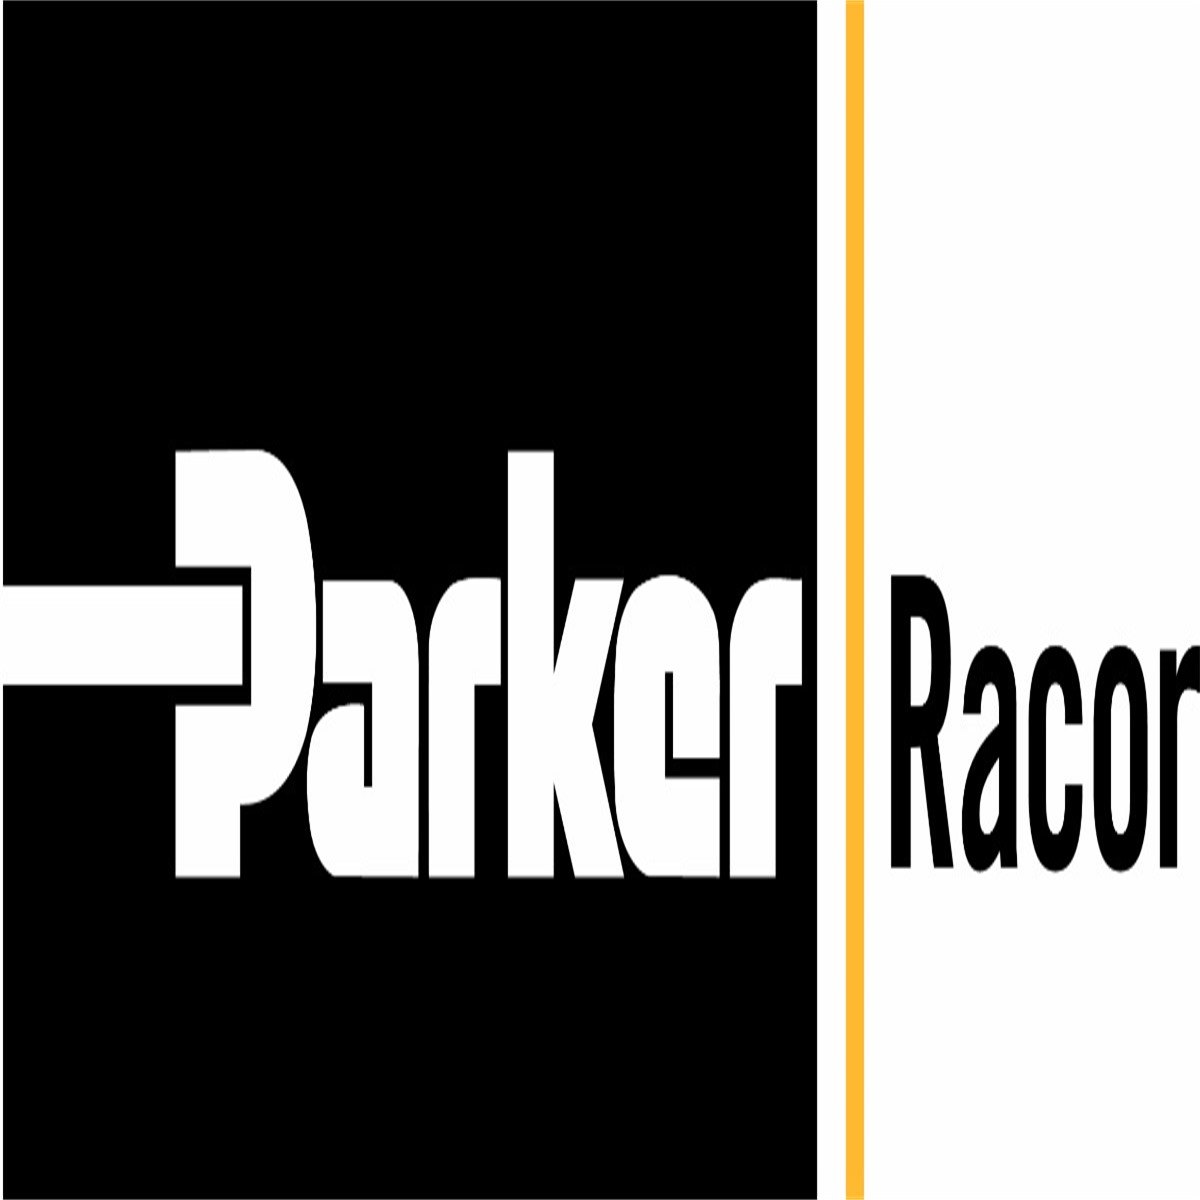 6  Parker Racor  Thumbnail0